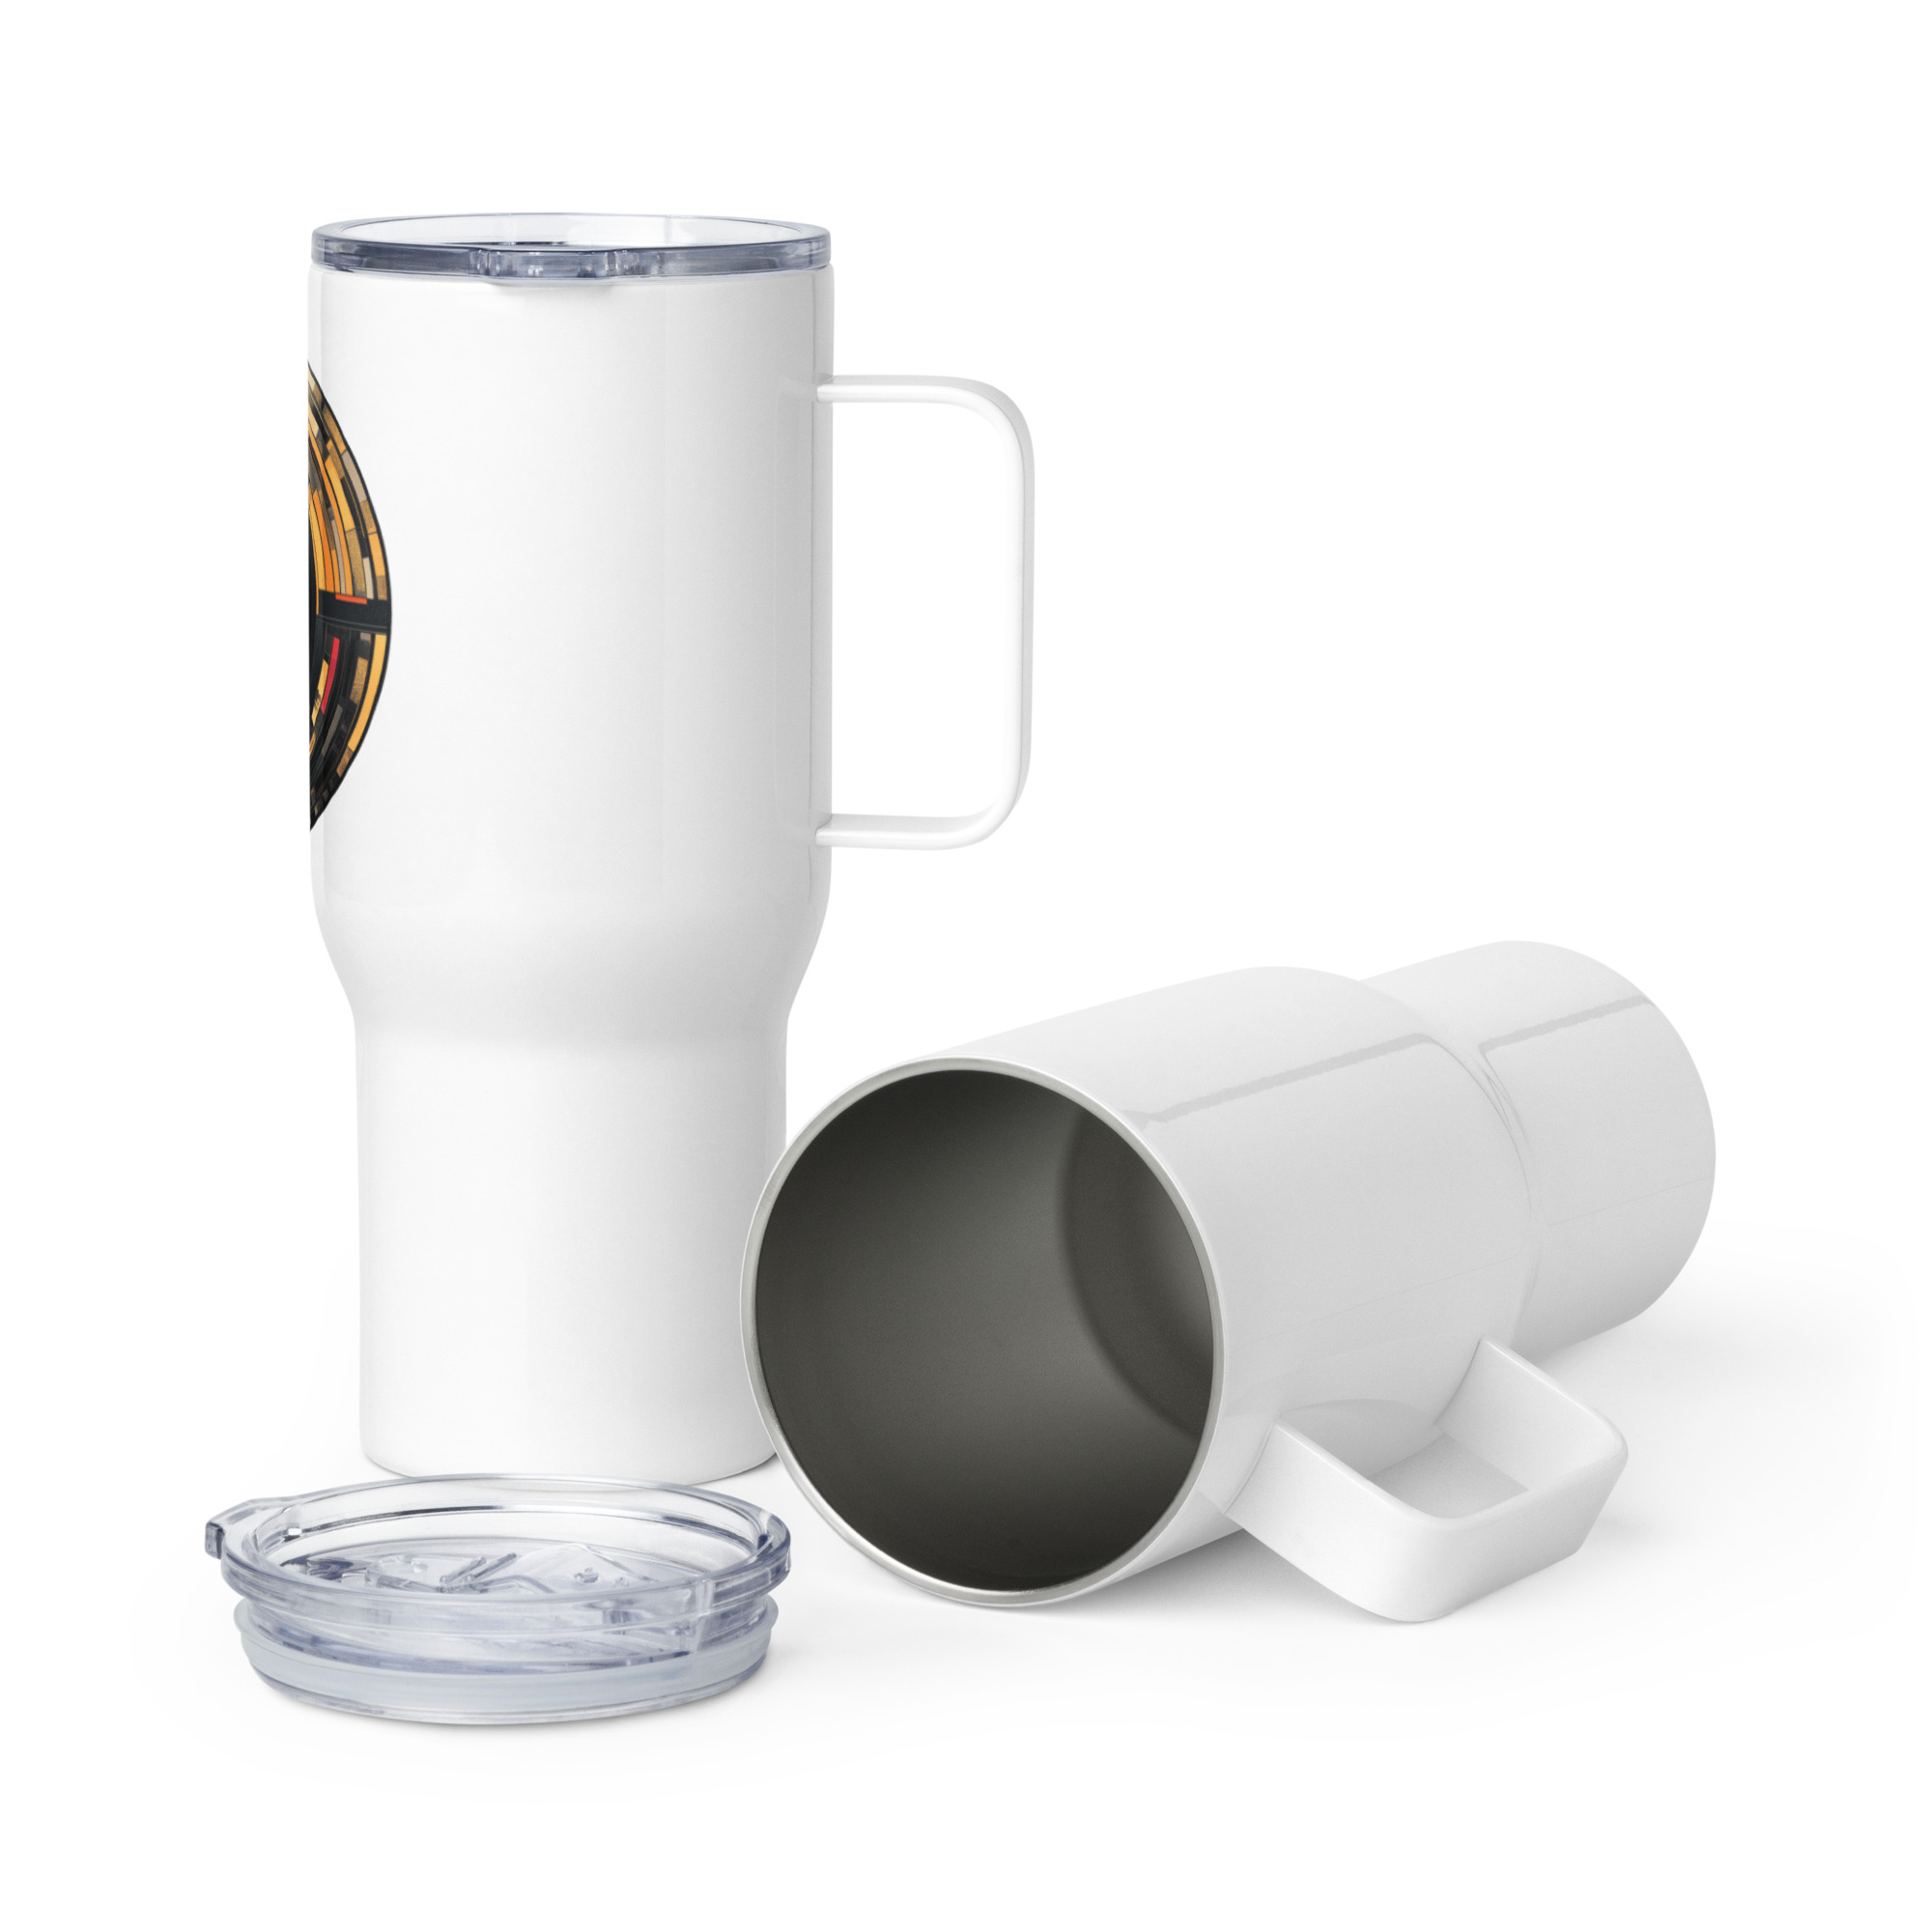 Analog Archivers Travel mug with handle